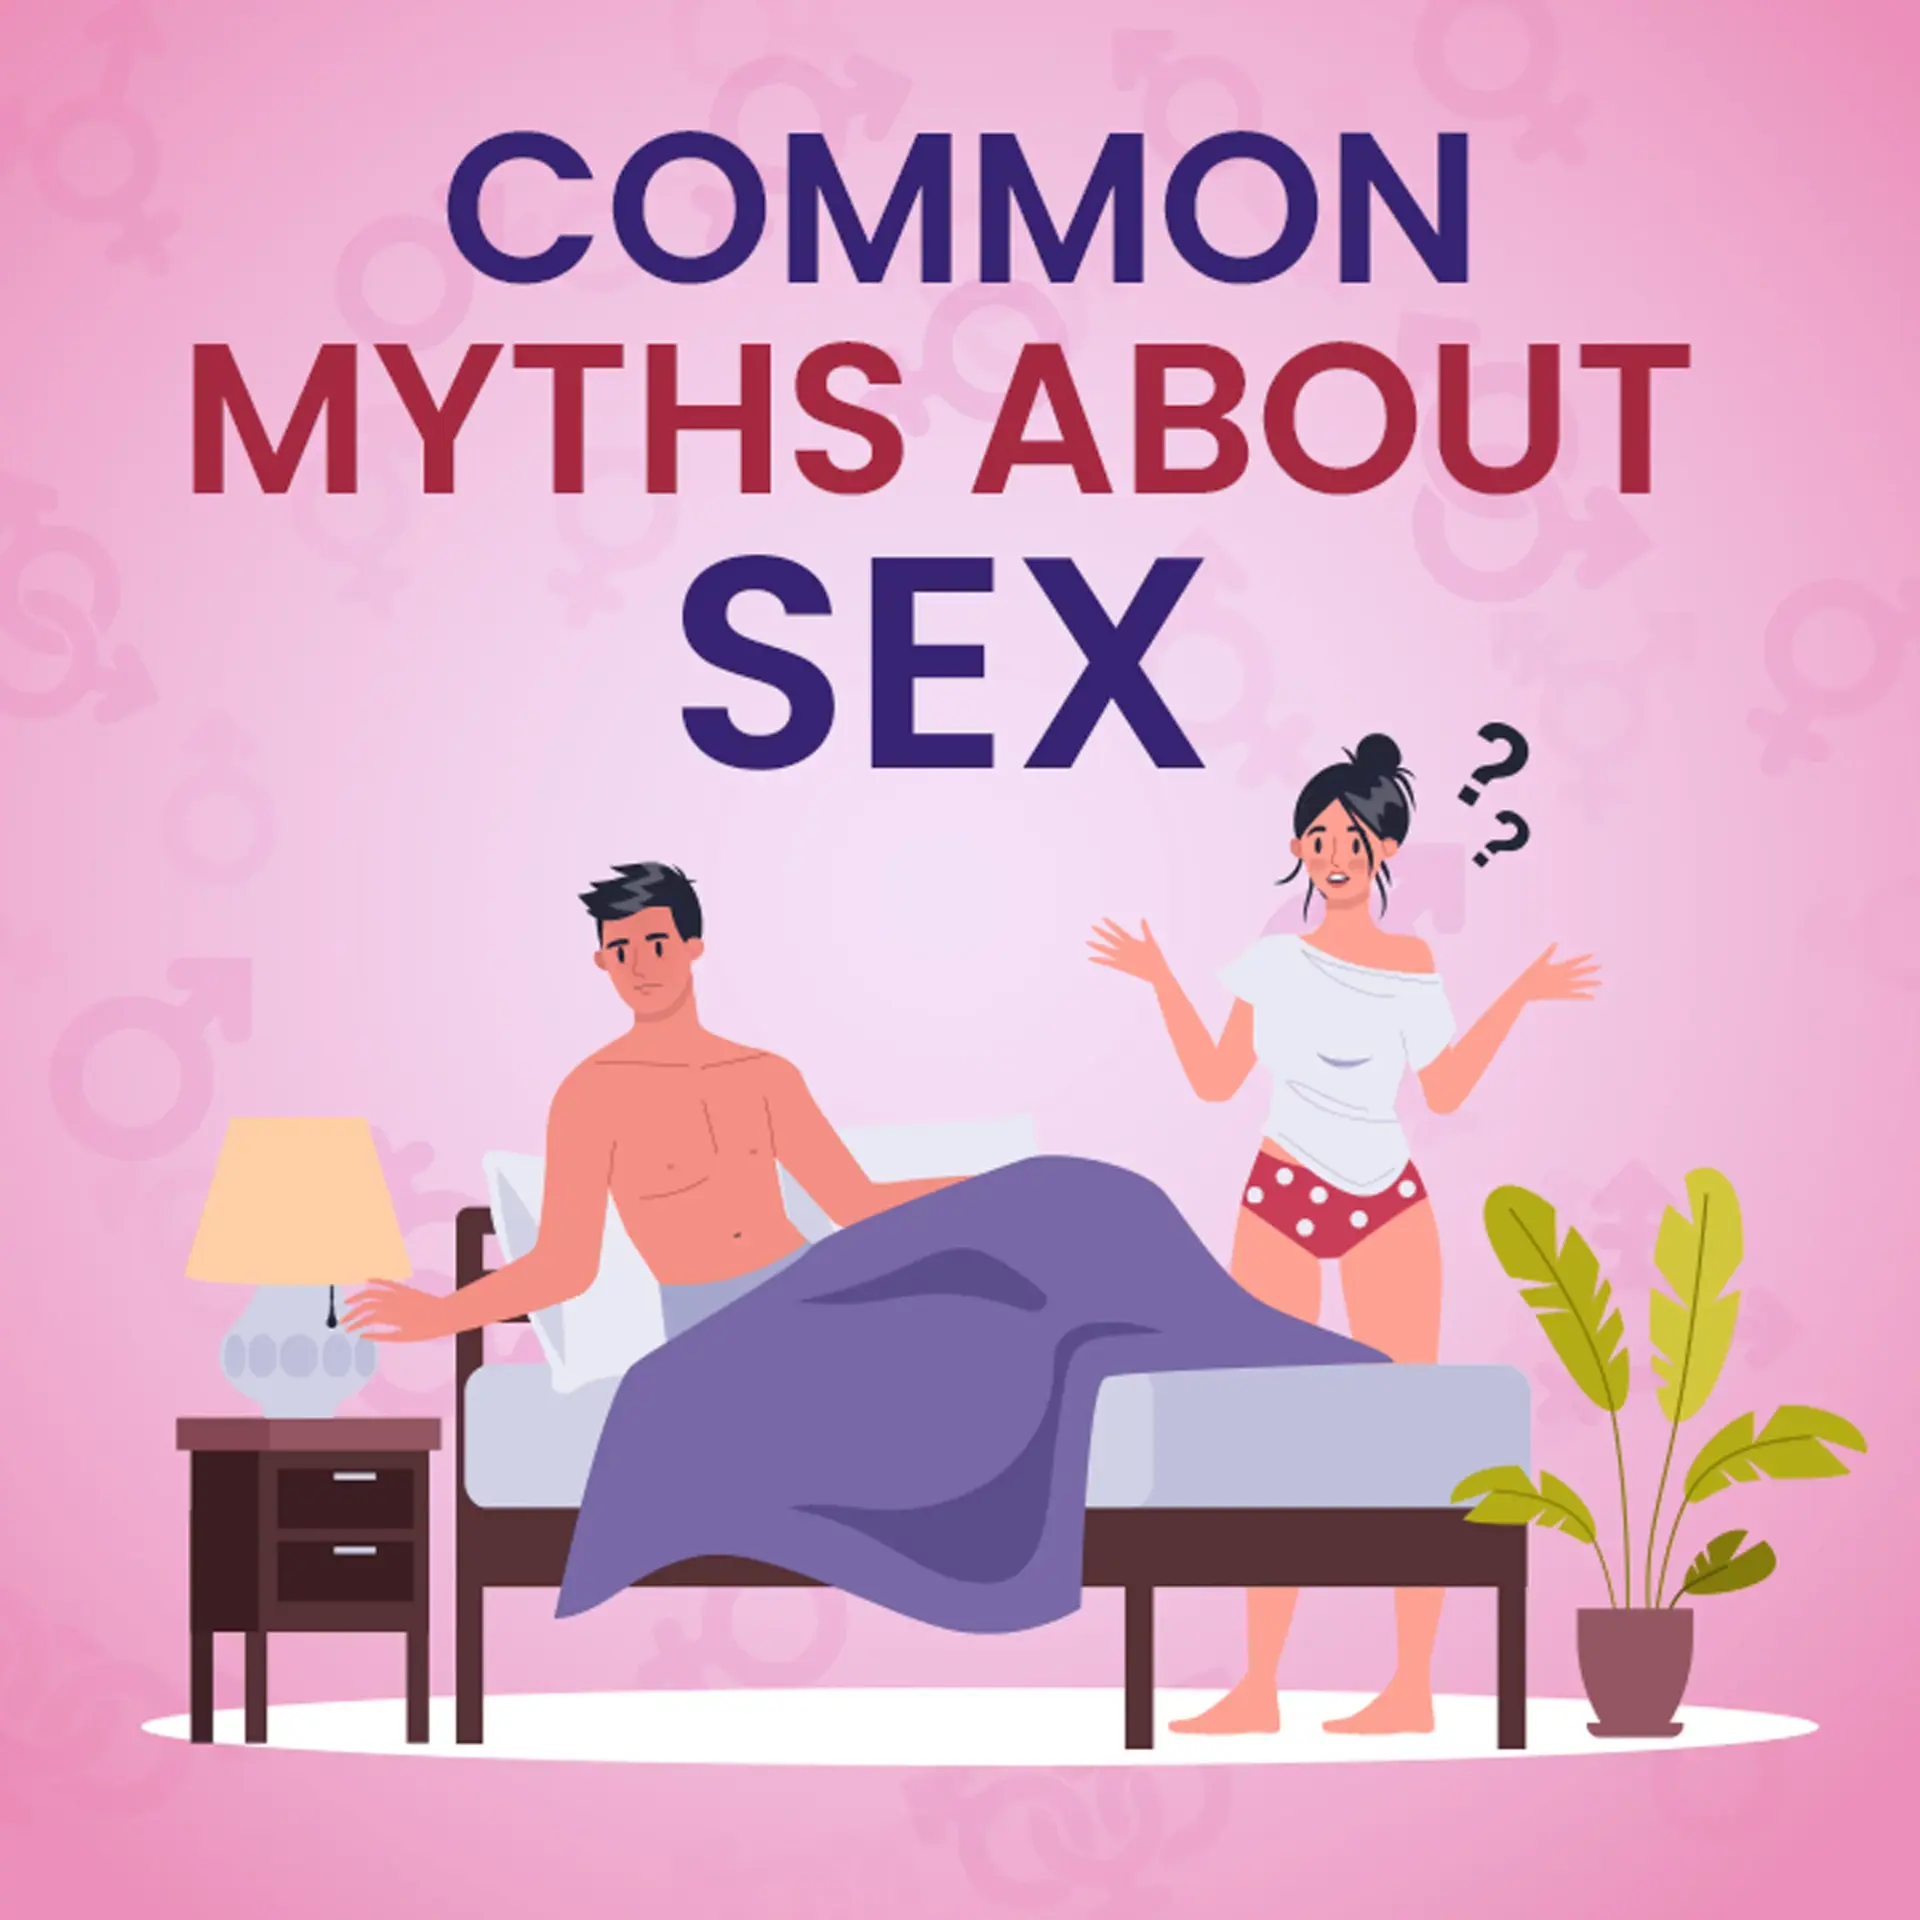 7. Menstrual Myths